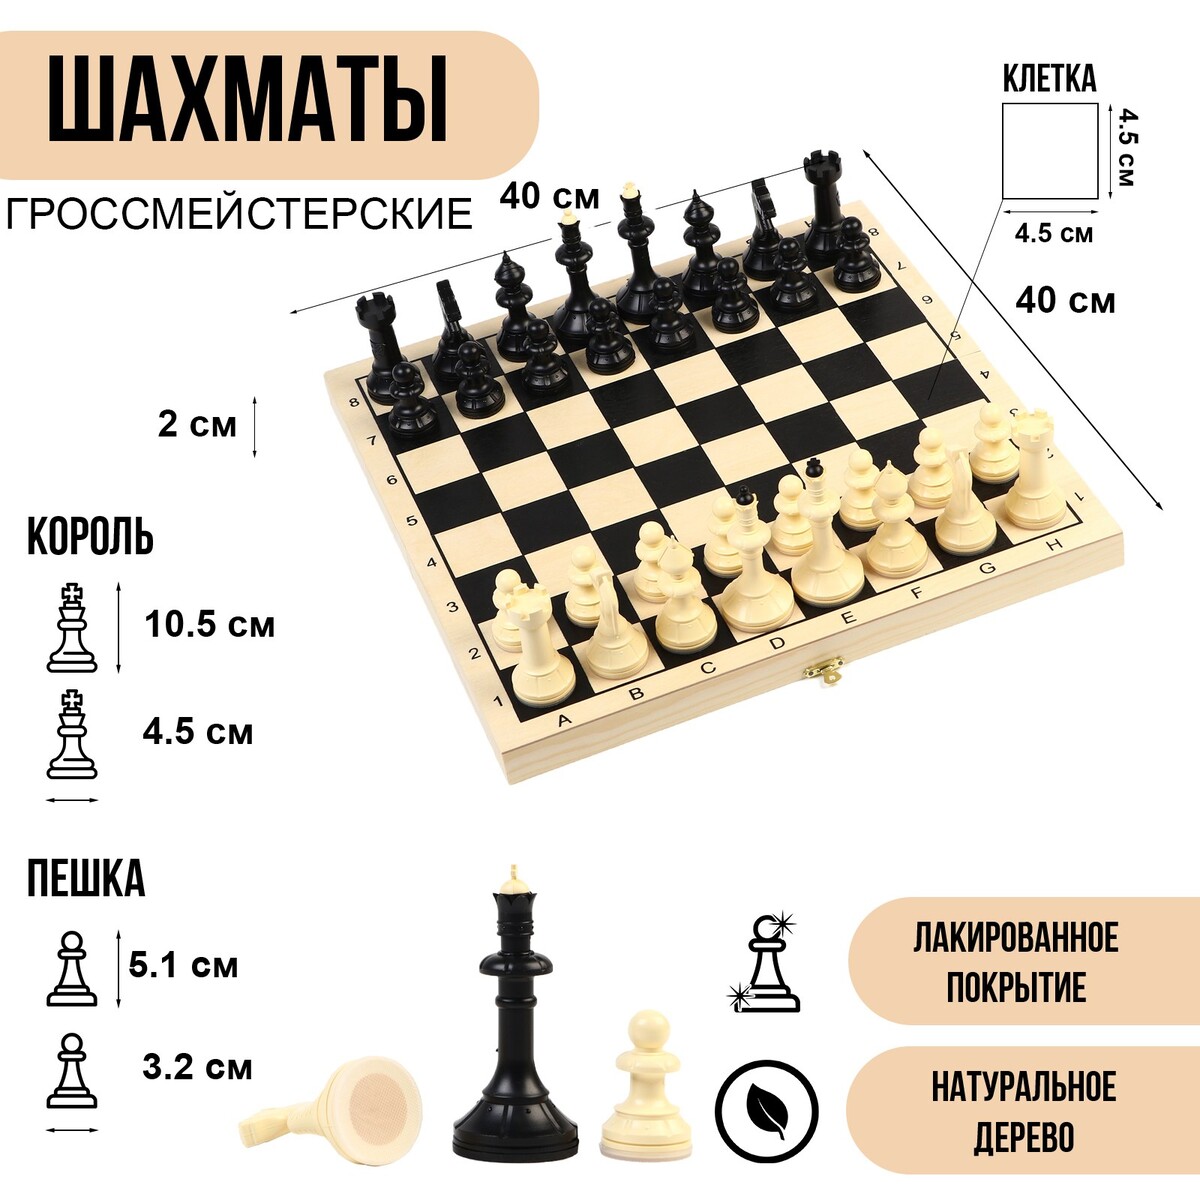 Шахматы гроссмейстерские, турнирные 40 х 40 см, король 10.5 см No brand